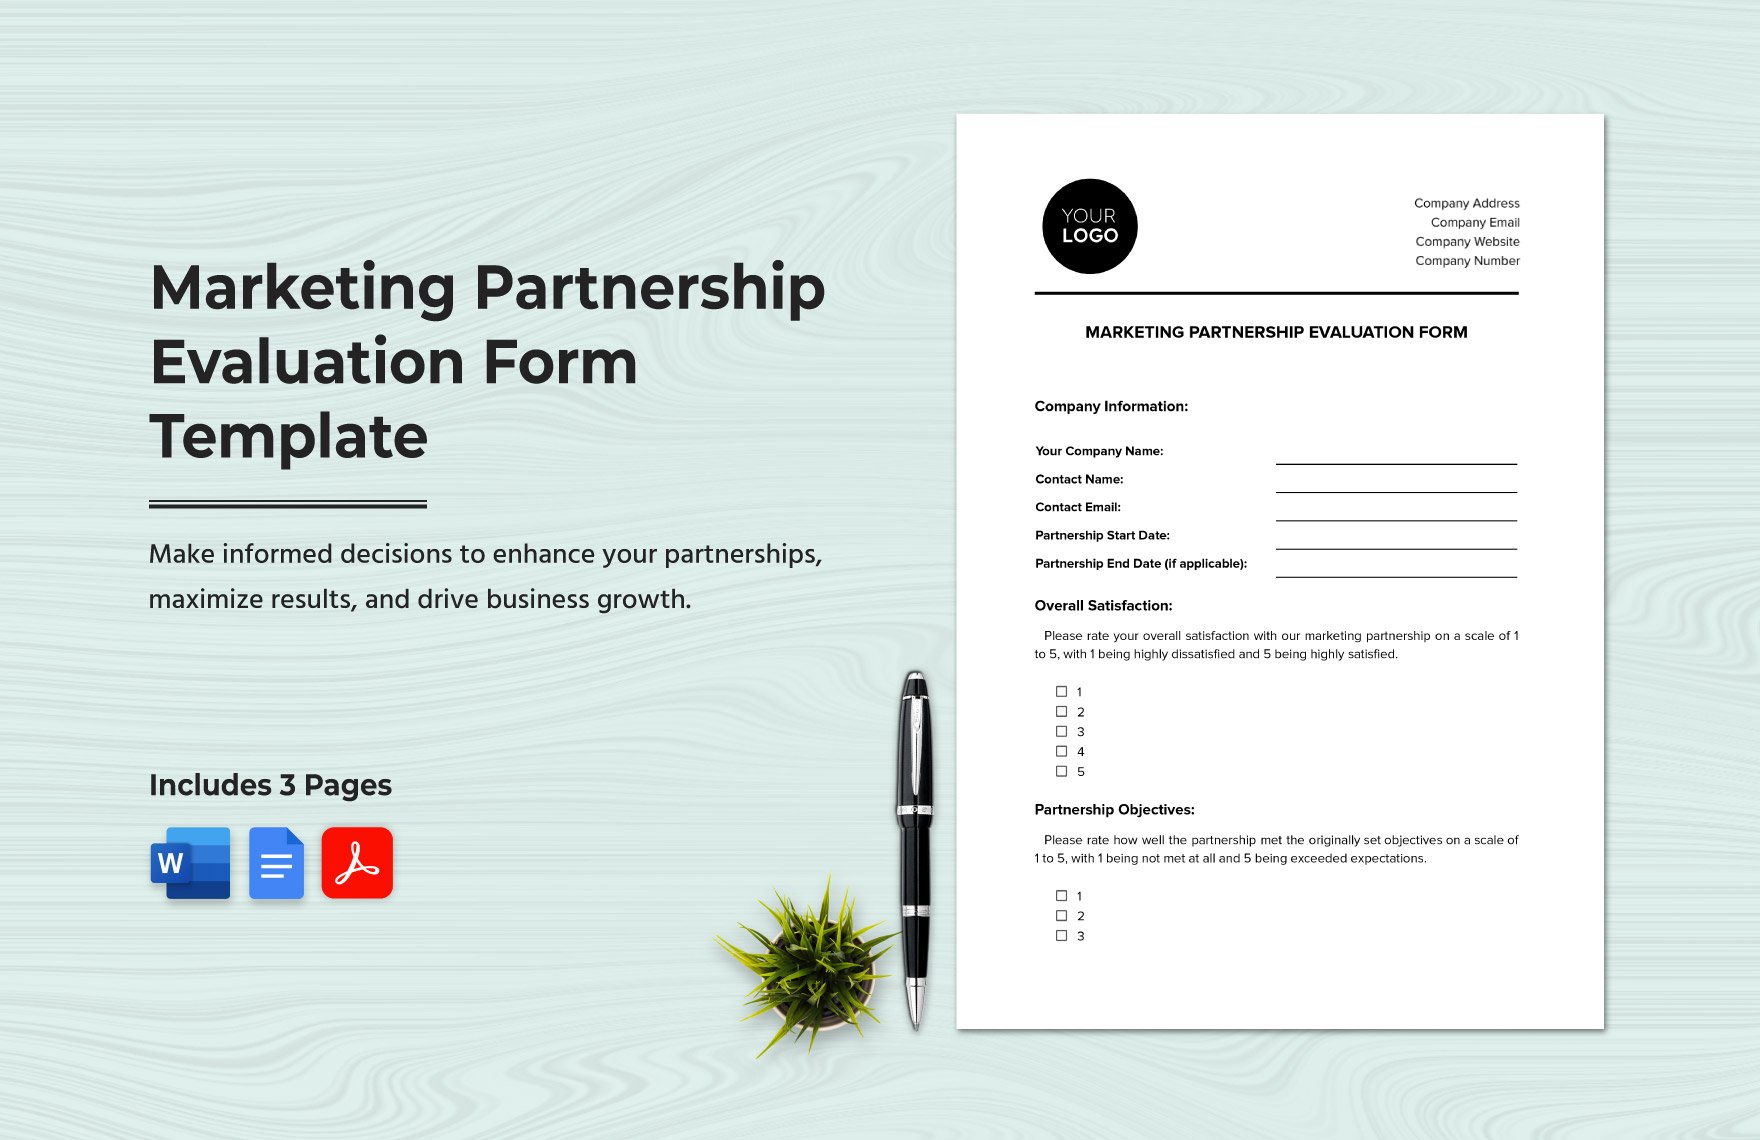 Marketing Partnership Evaluation Form Template